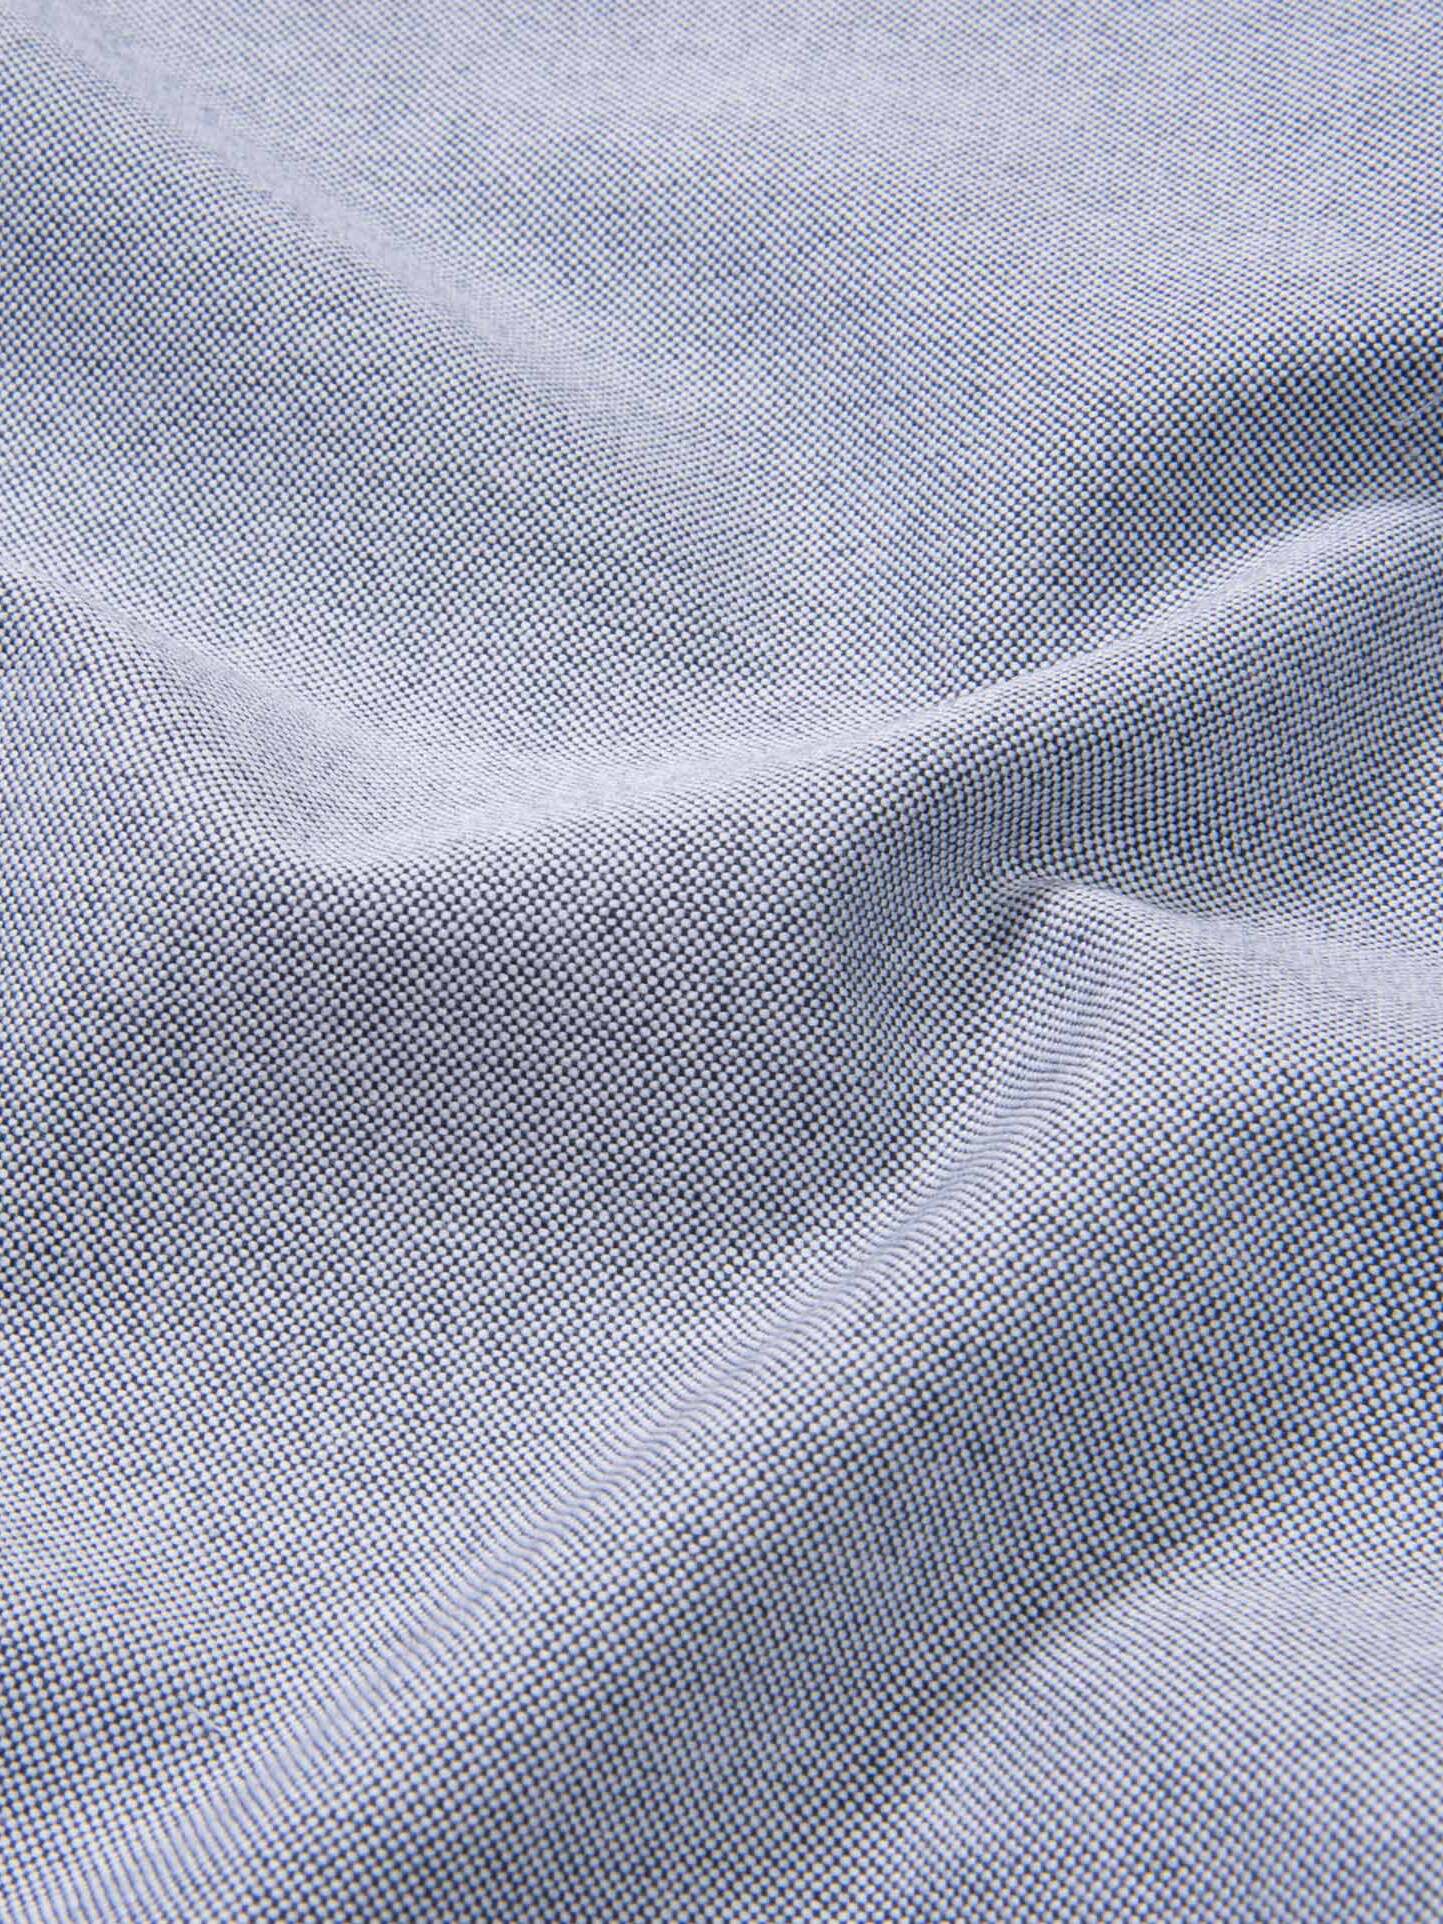 Charcoal Oxford Cloth Shirts by Proper Cloth